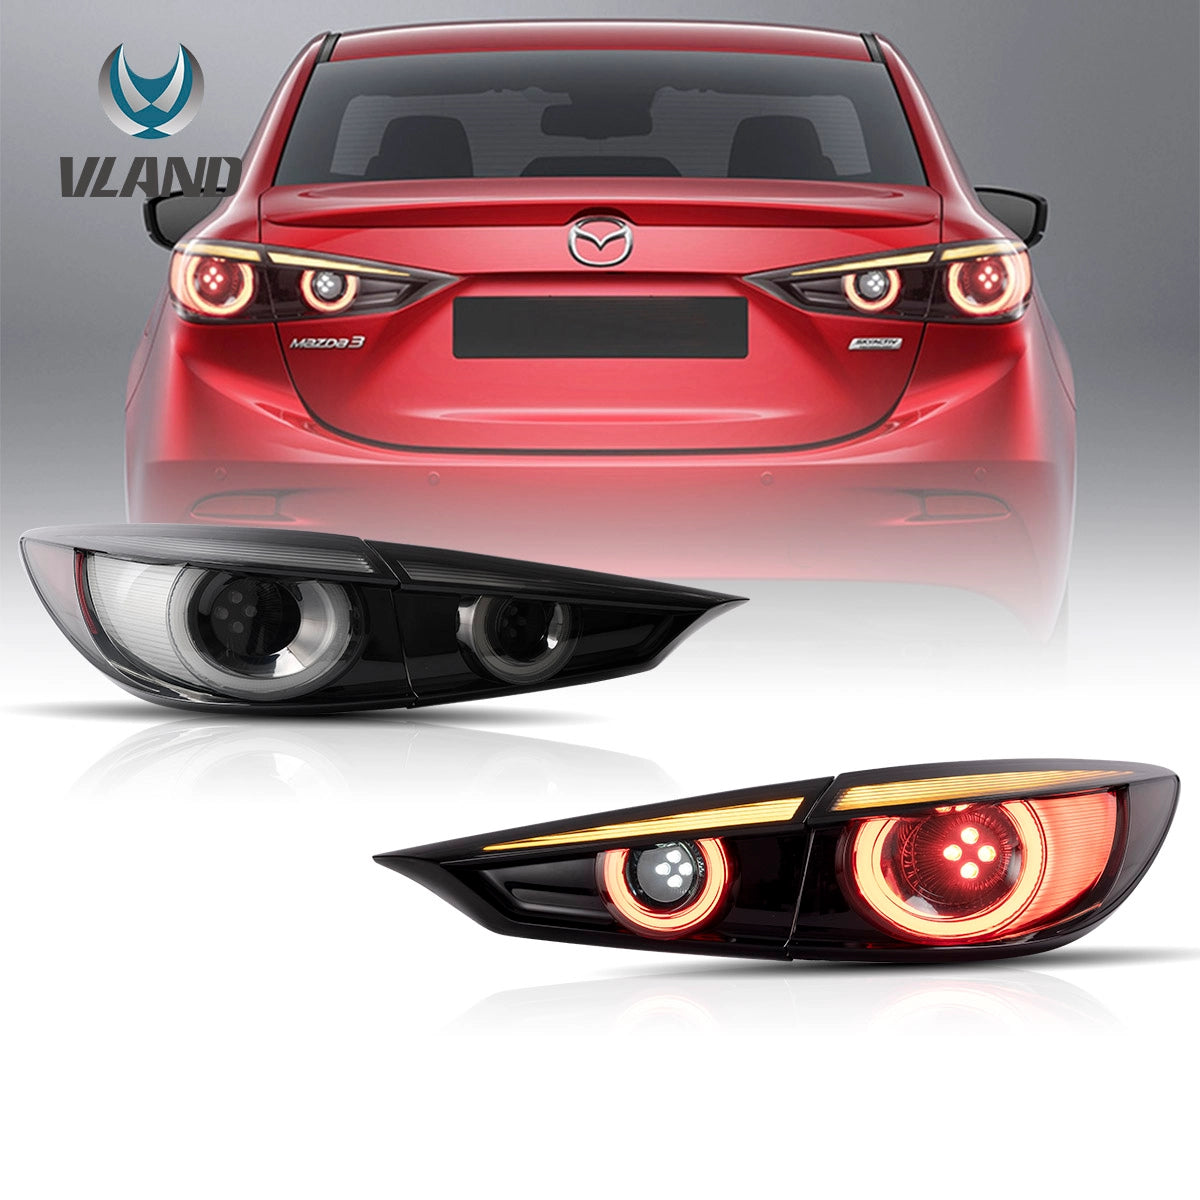 14-18 Mazda3 Axela 3th Gen(BM,BN) Sedan Vland LED Tail Lamp Dynamic Welcome Light Smoke Specification